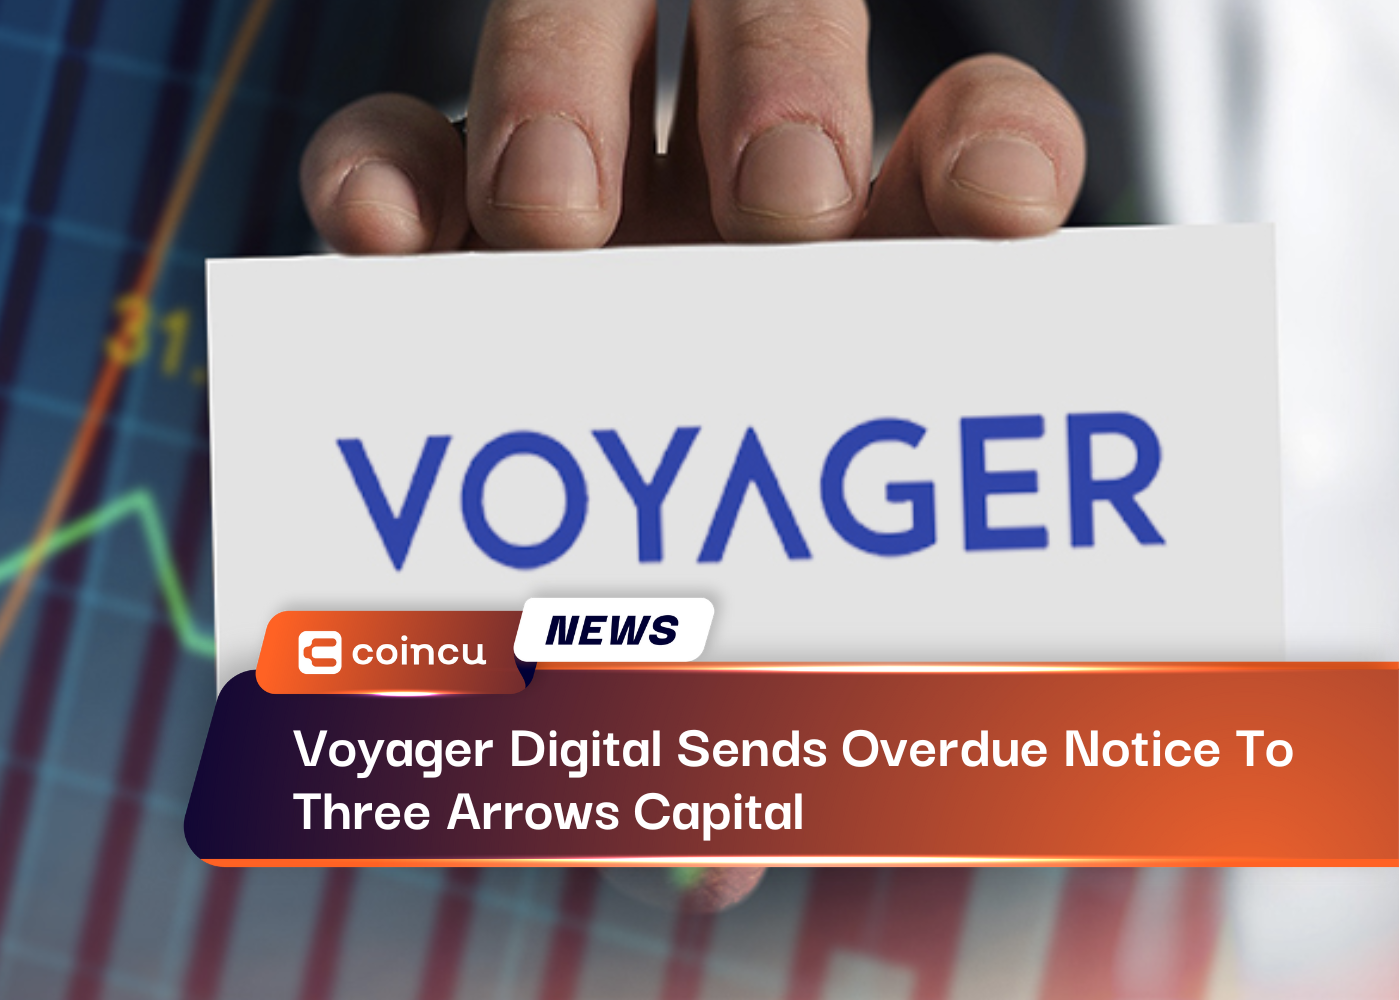 Voyager Digital、Three Arrows Capital に期限超過通知を送信